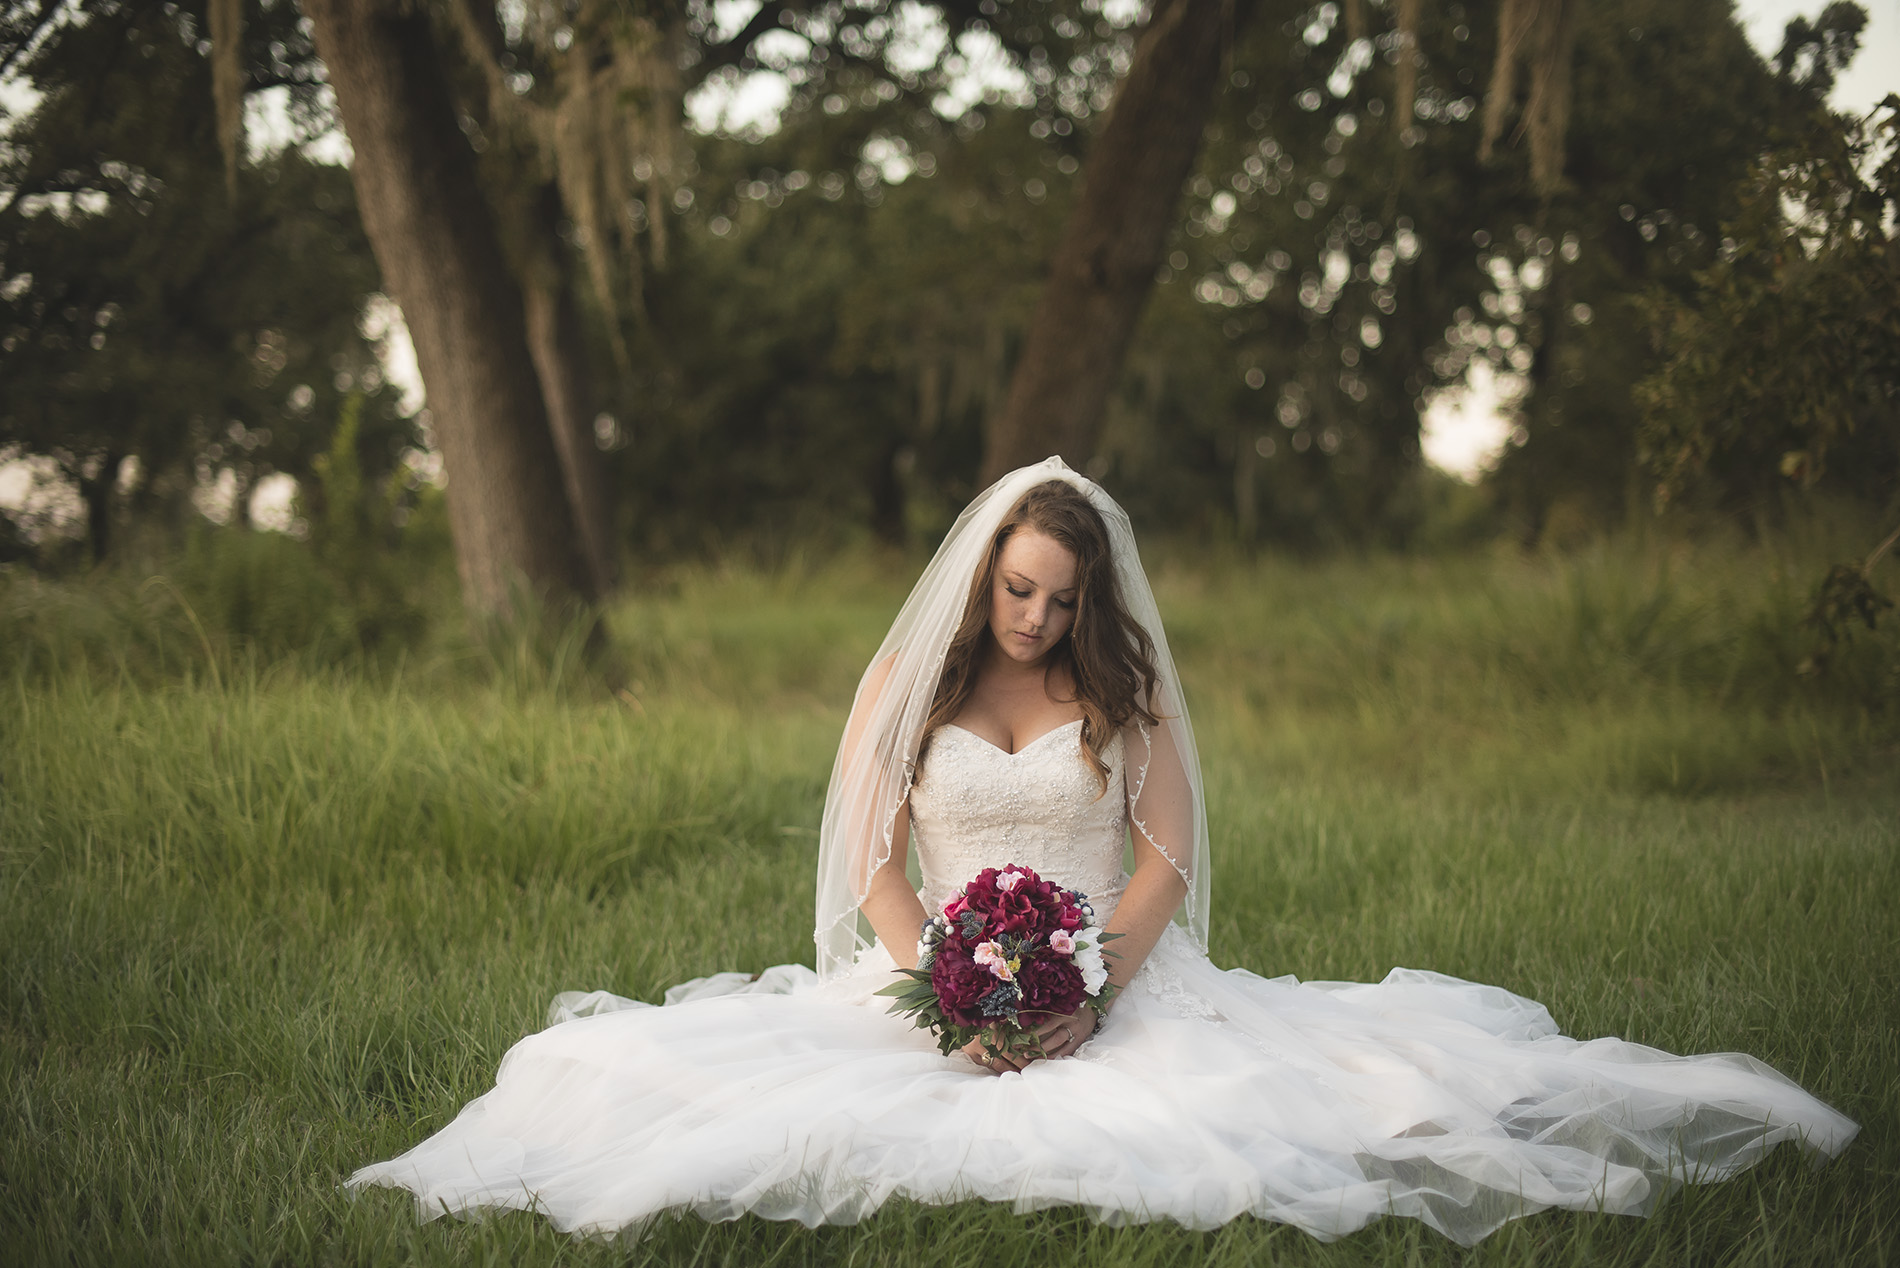 Houston bride Hermann park photo session 